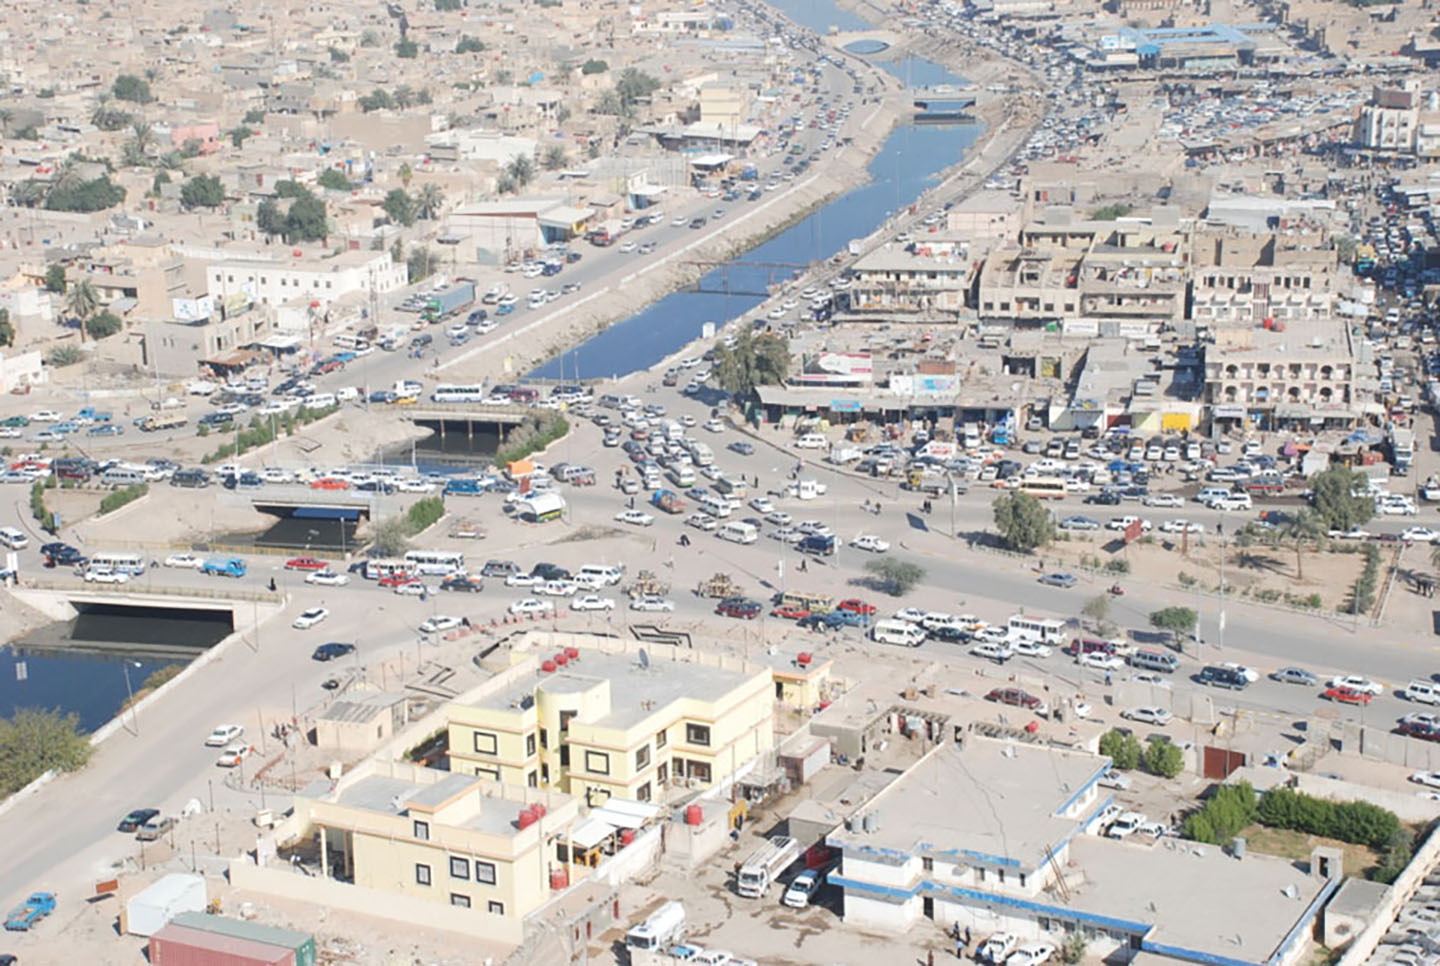 City of Basra Master Plan